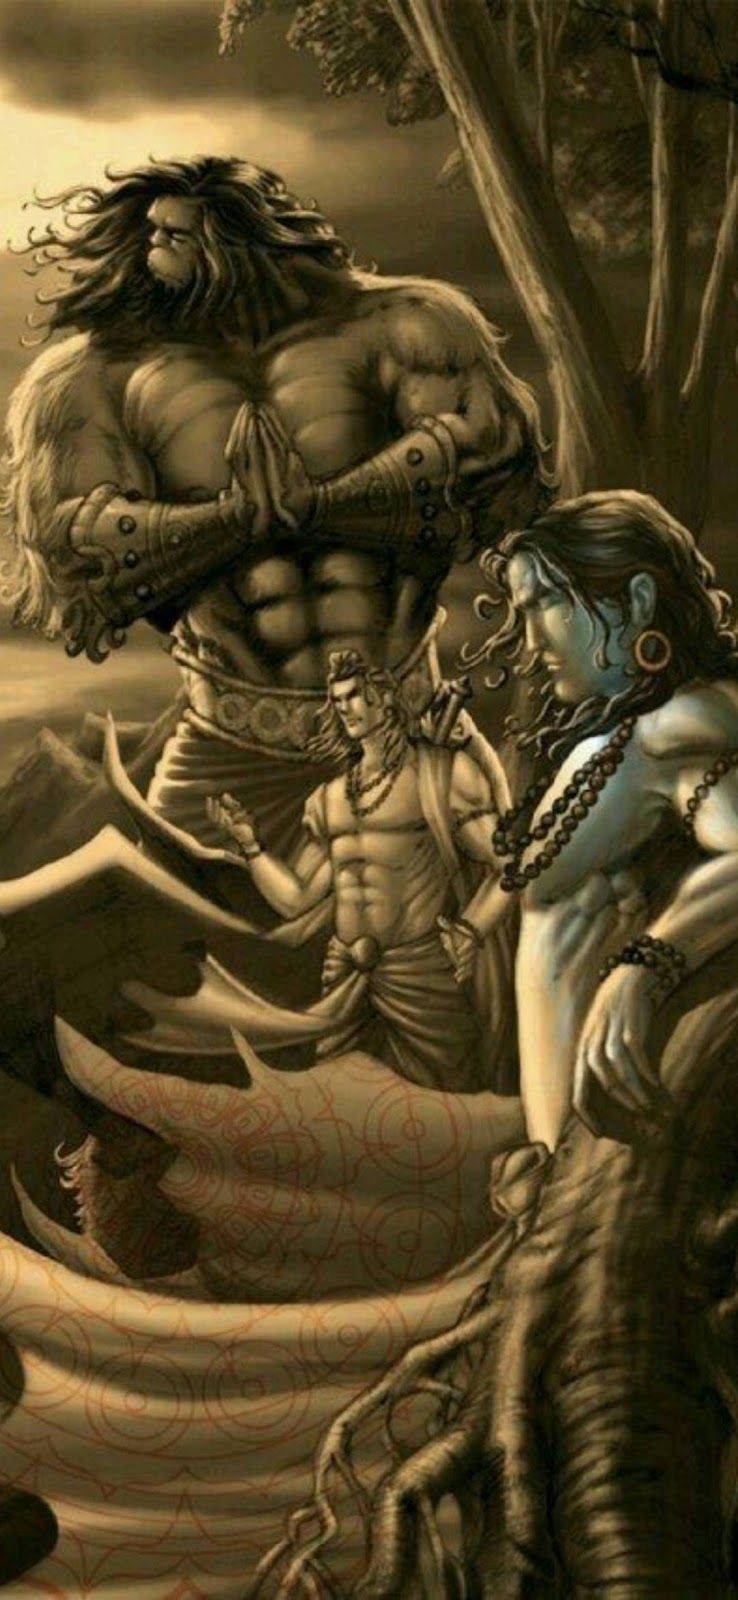 Angry Lord Rama Hd Wallpapers - Free download bhagwan sri ram photos ...